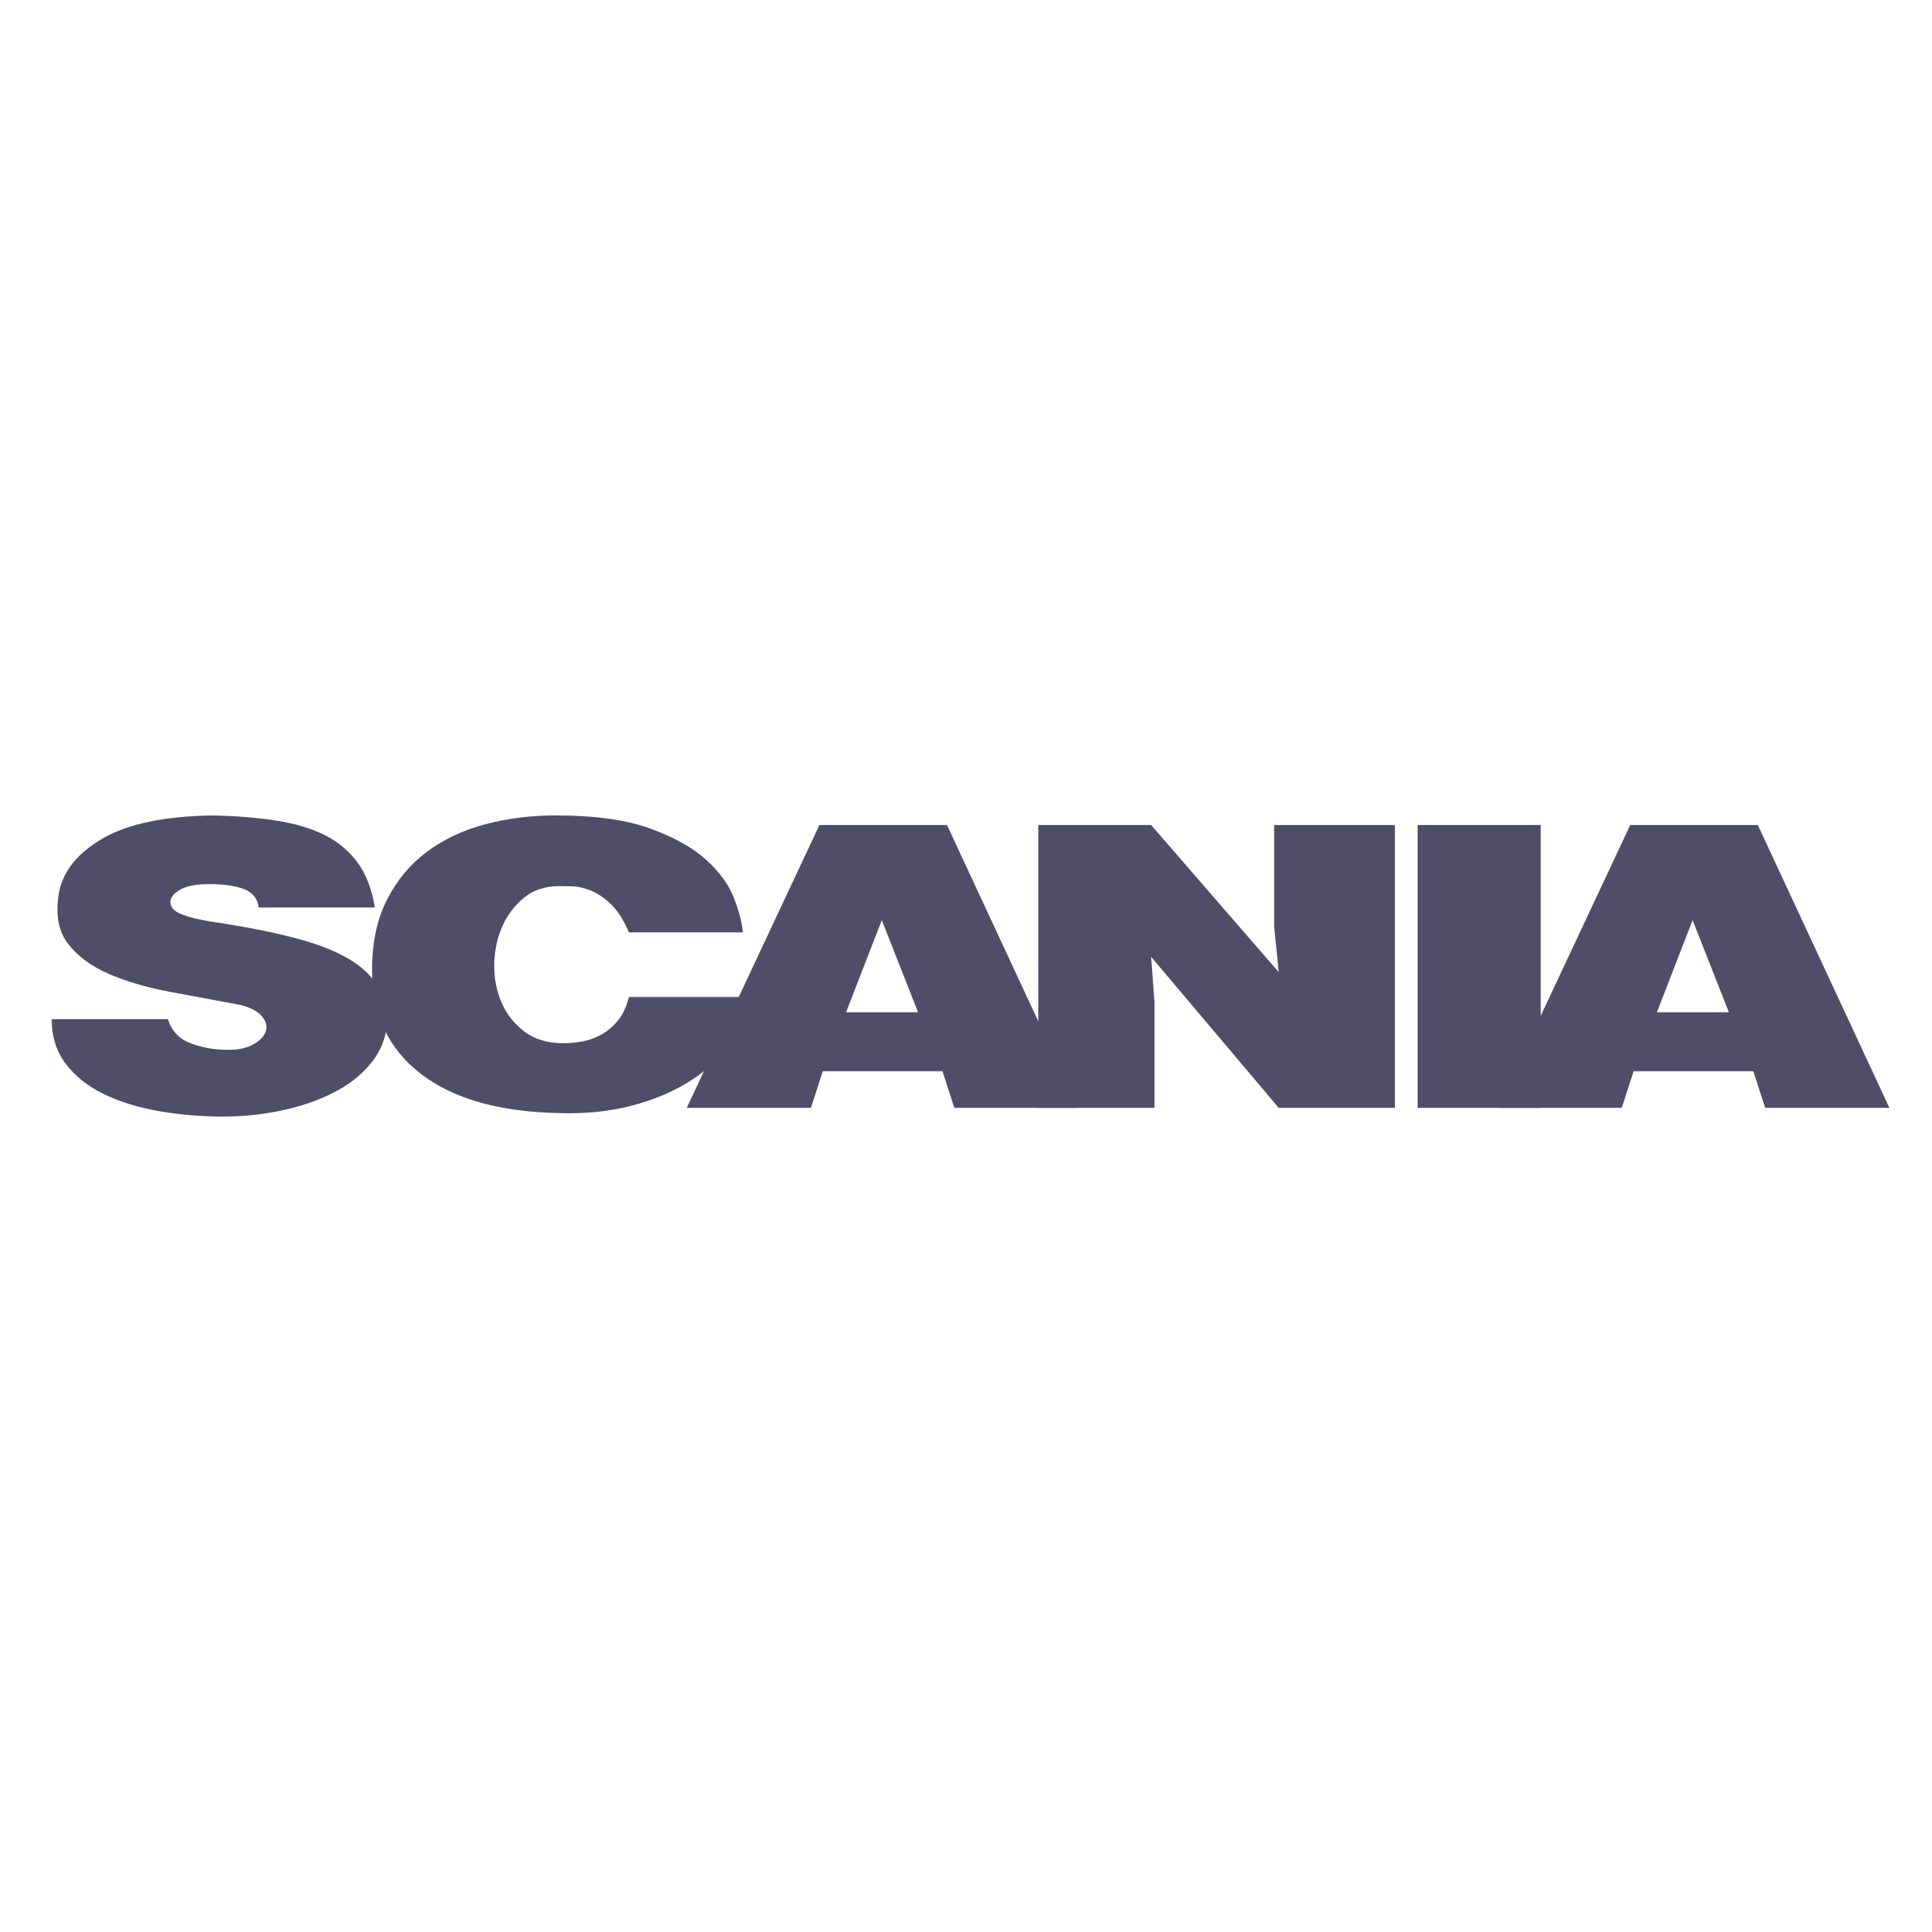 Scania Logo PNG - 178930